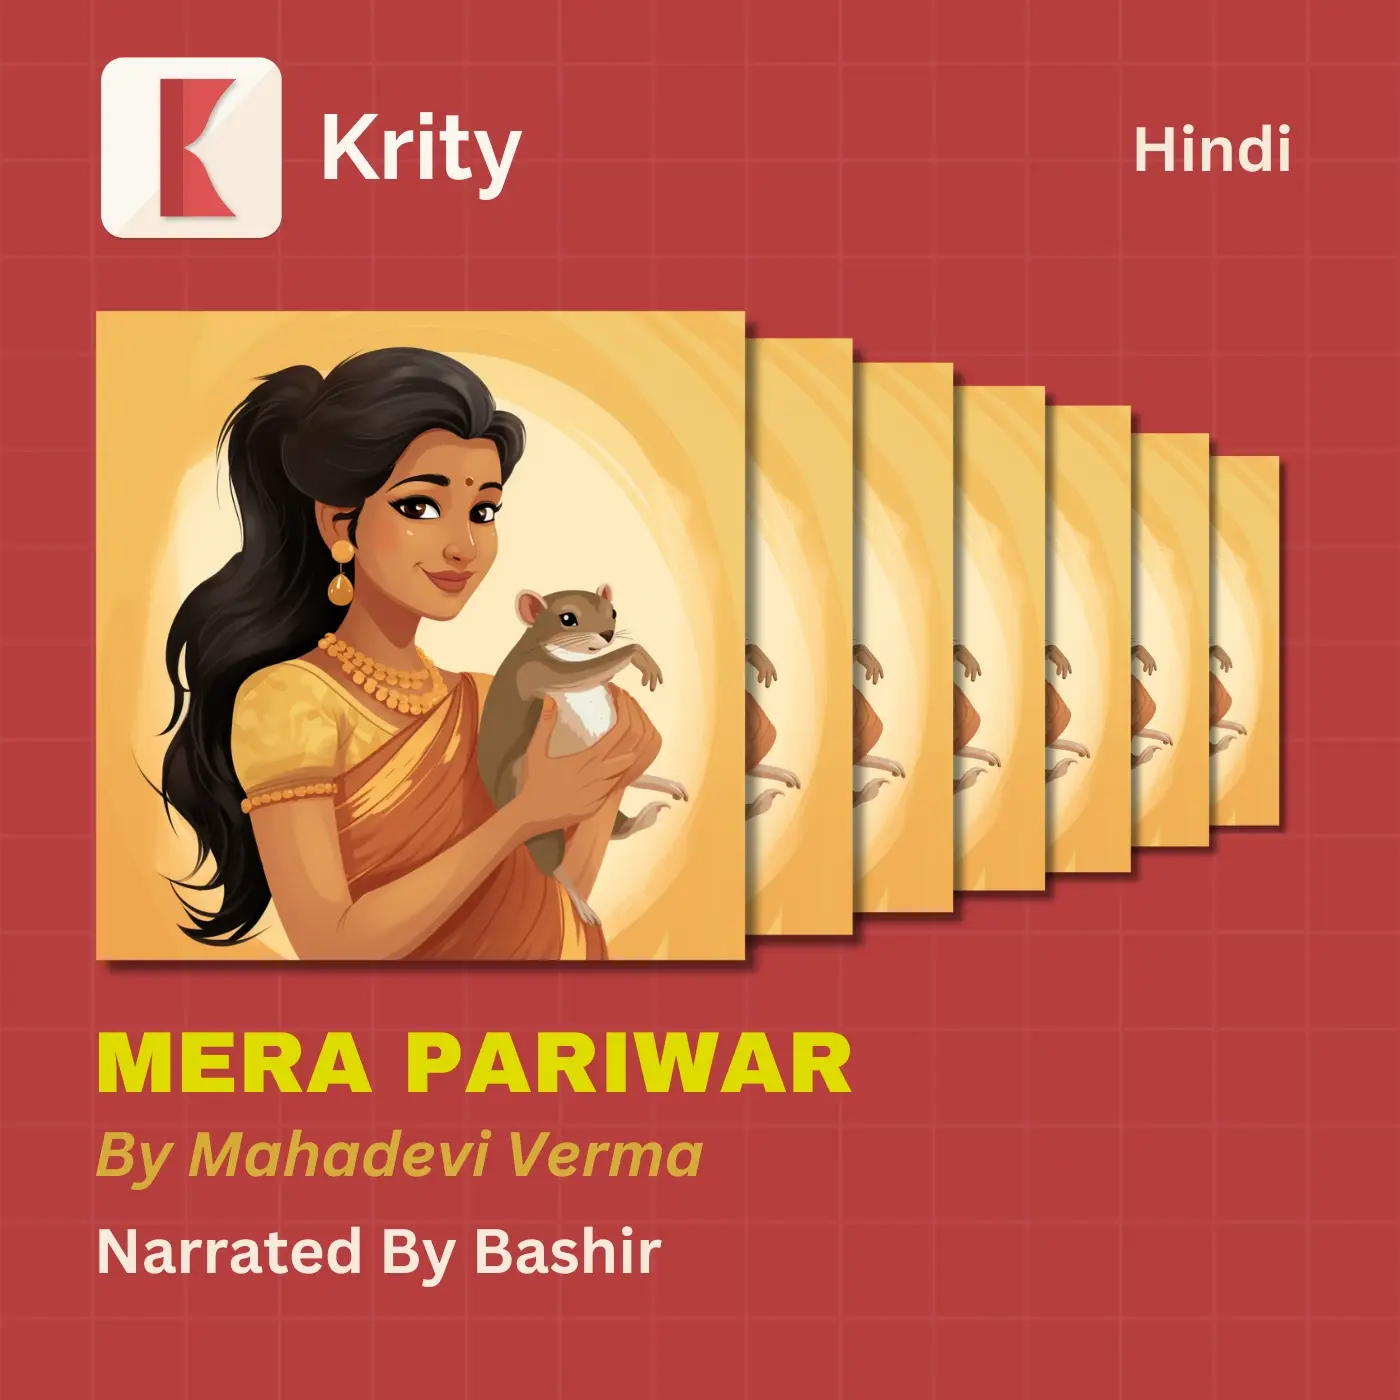 Mera Pariwar by Mahadevi Verma